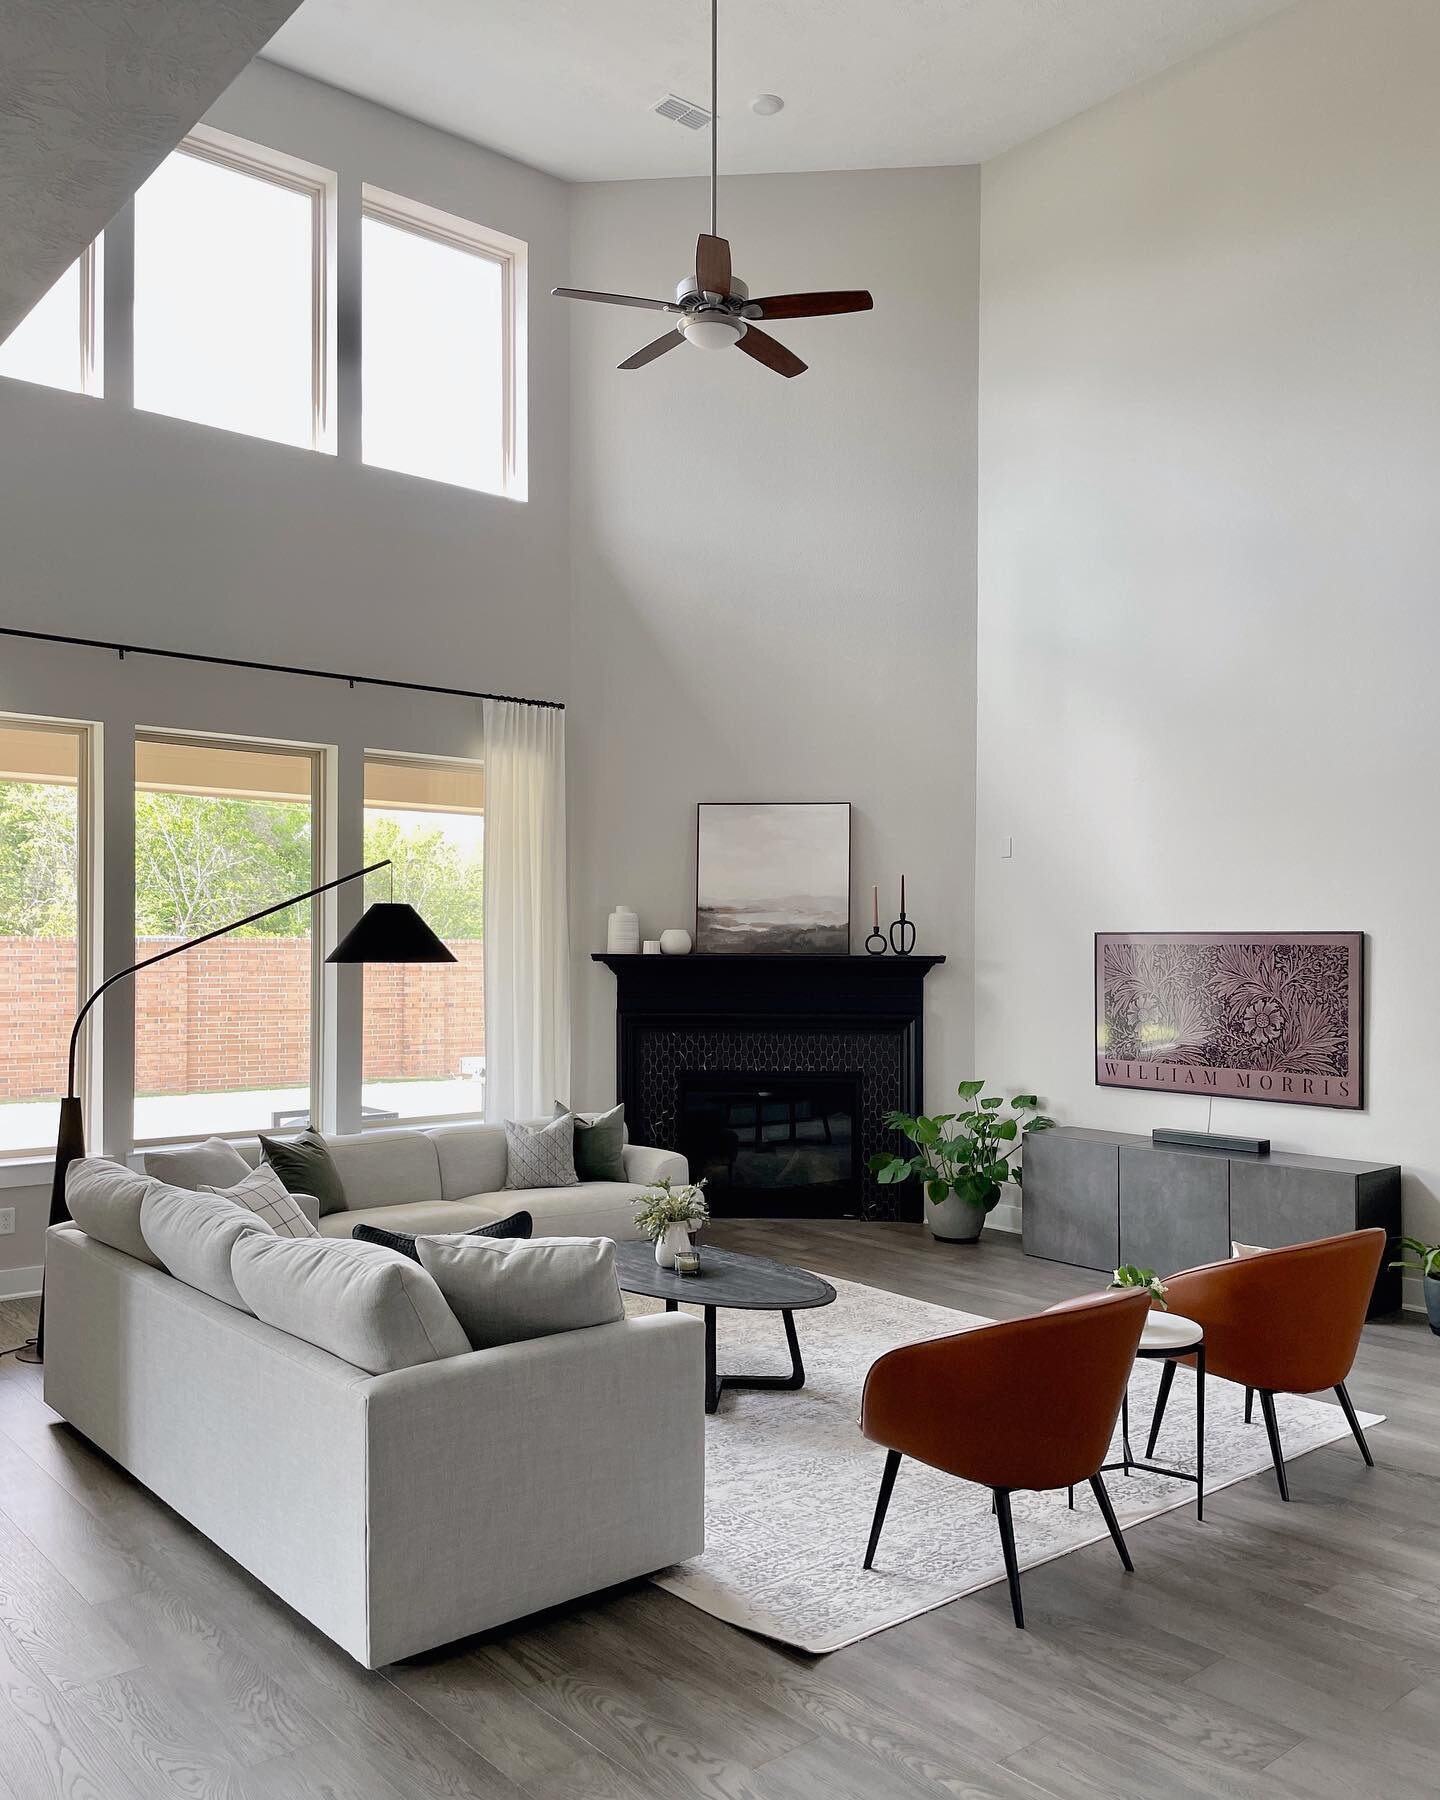 A minimalist living room for maximum relaxation ☁️
⠀⠀⠀⠀⠀⠀⠀ 
Design: @studio_lhk
⠀⠀⠀⠀⠀⠀⠀ 
#livingroomdecor #livingroominspo #livingroomdesign #minimalmodern #homedecor #cratestyle